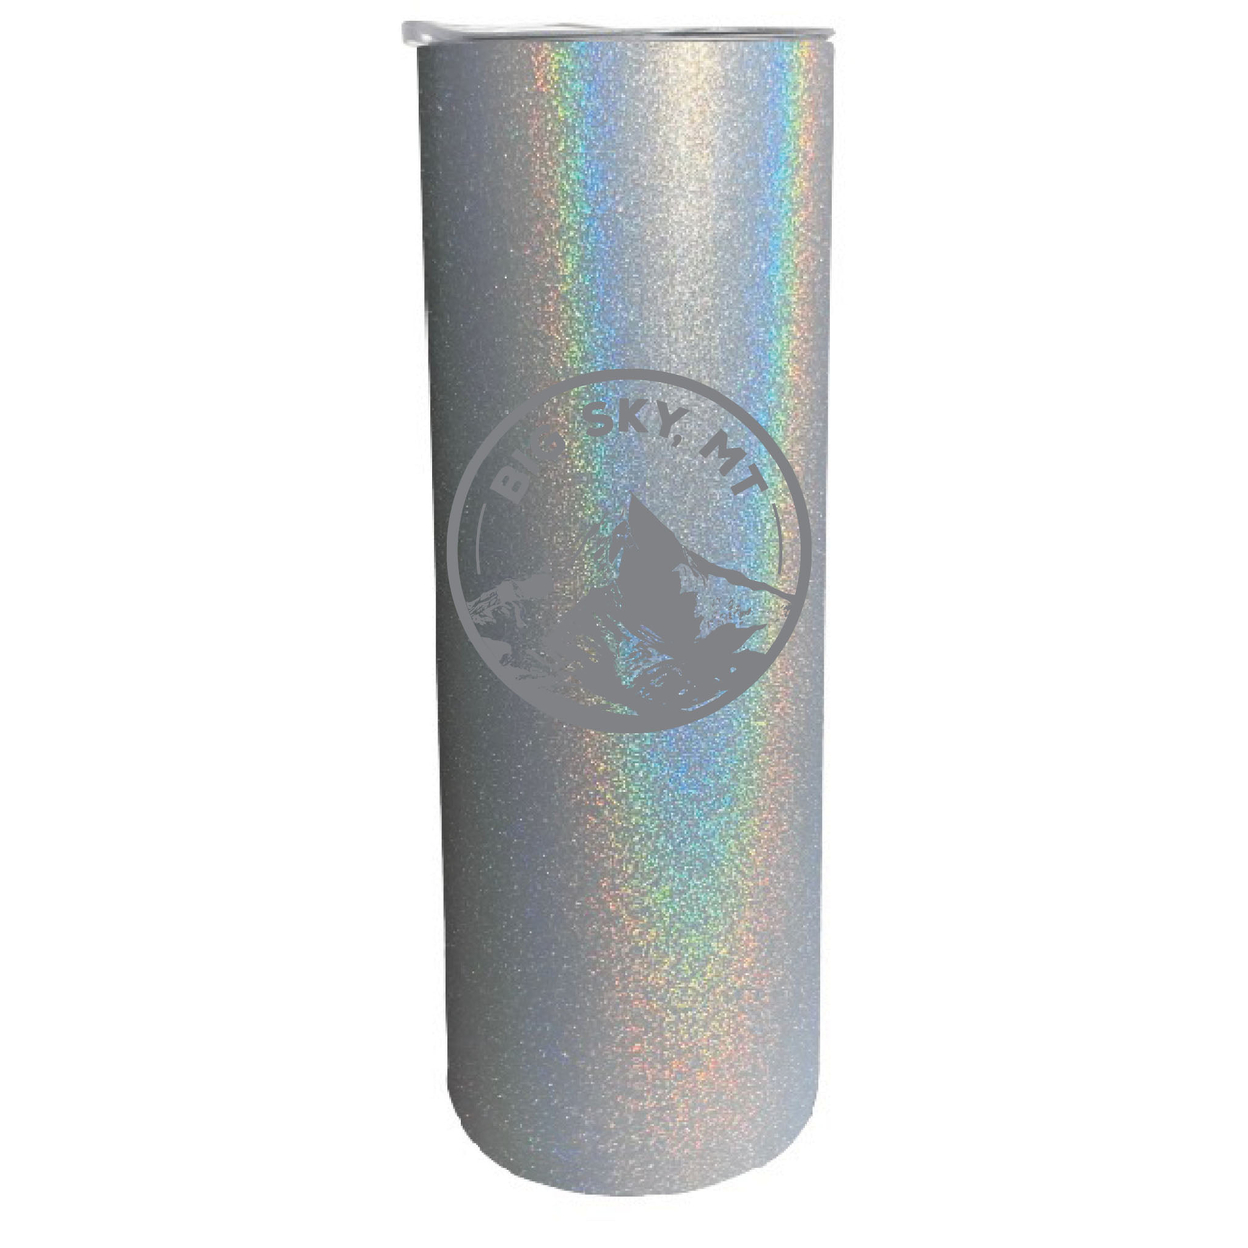 Big Sky Montana Souvenir 20 Oz Engraved Insulated Stainless Steel Skinny Tumbler - Gray Glitter,,2-Pack